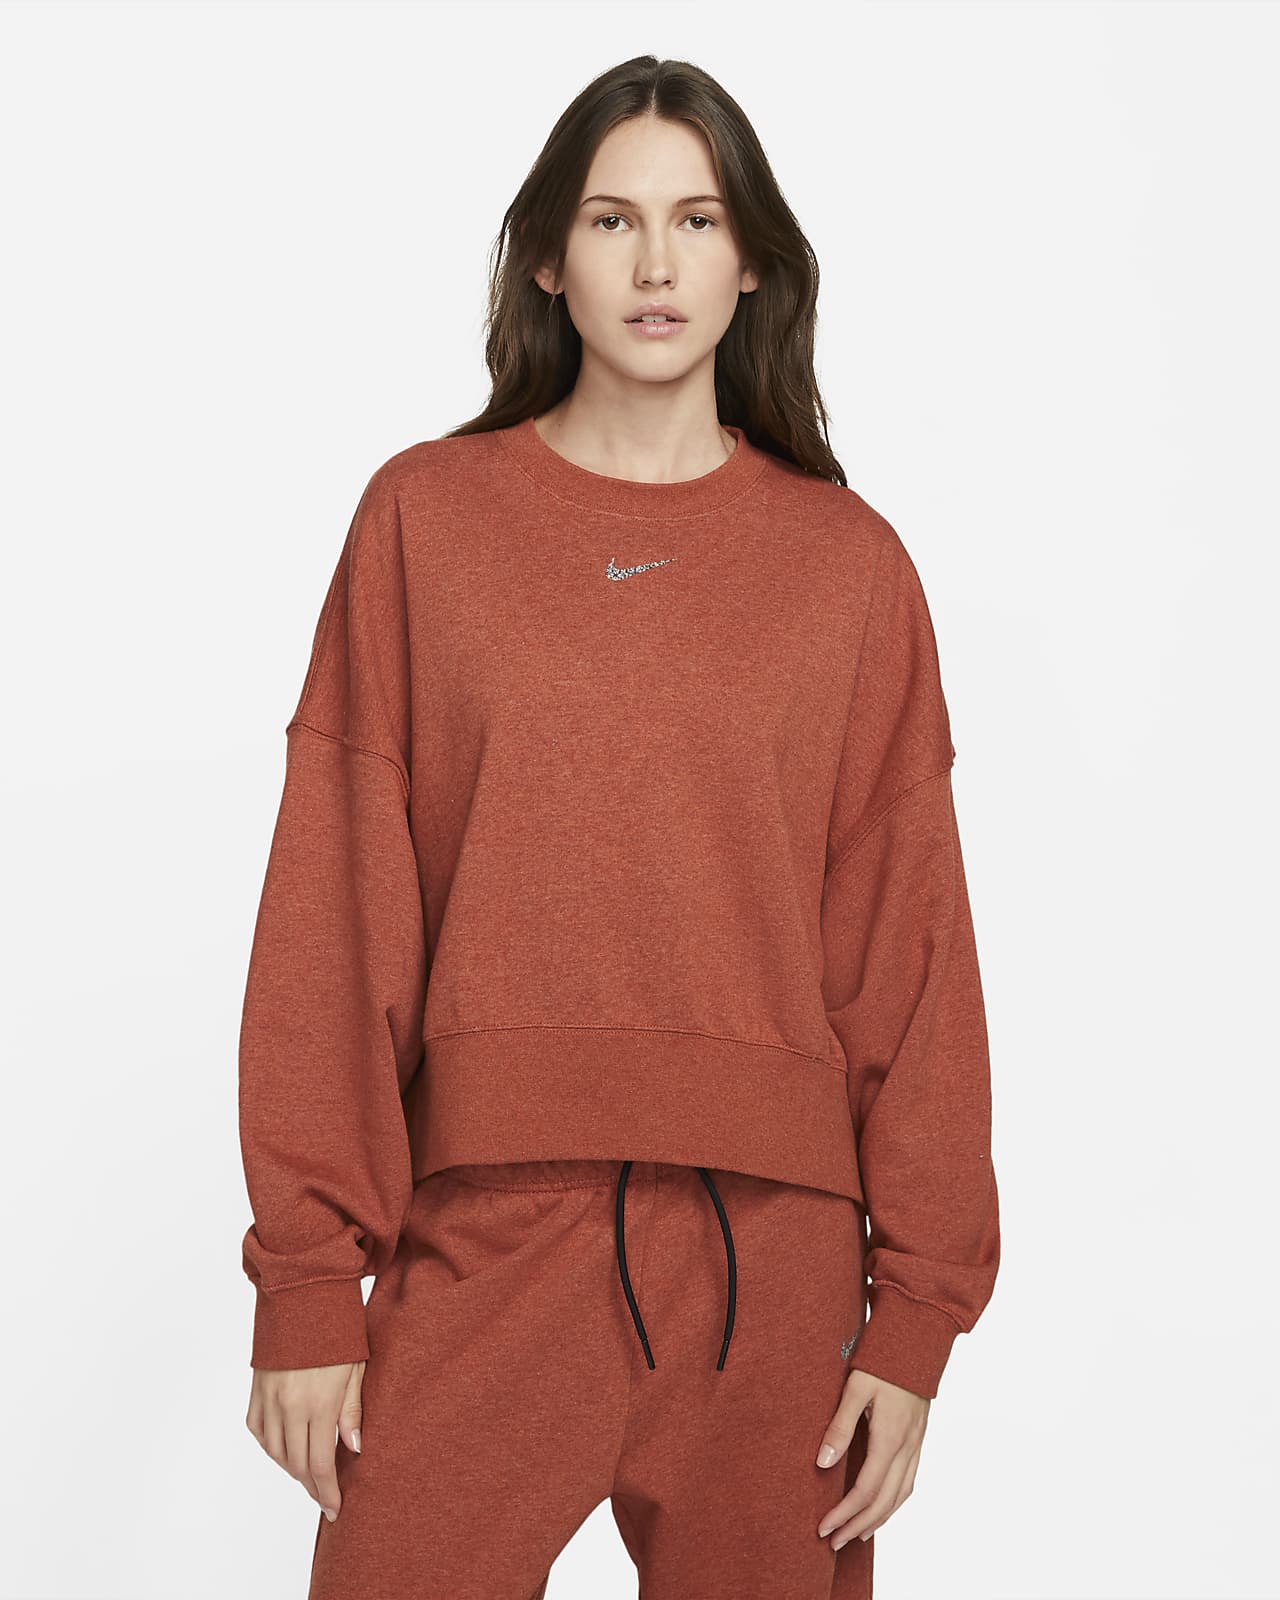 Nike Sportswear Collection Essentials Women's Oversized Fleece Crew